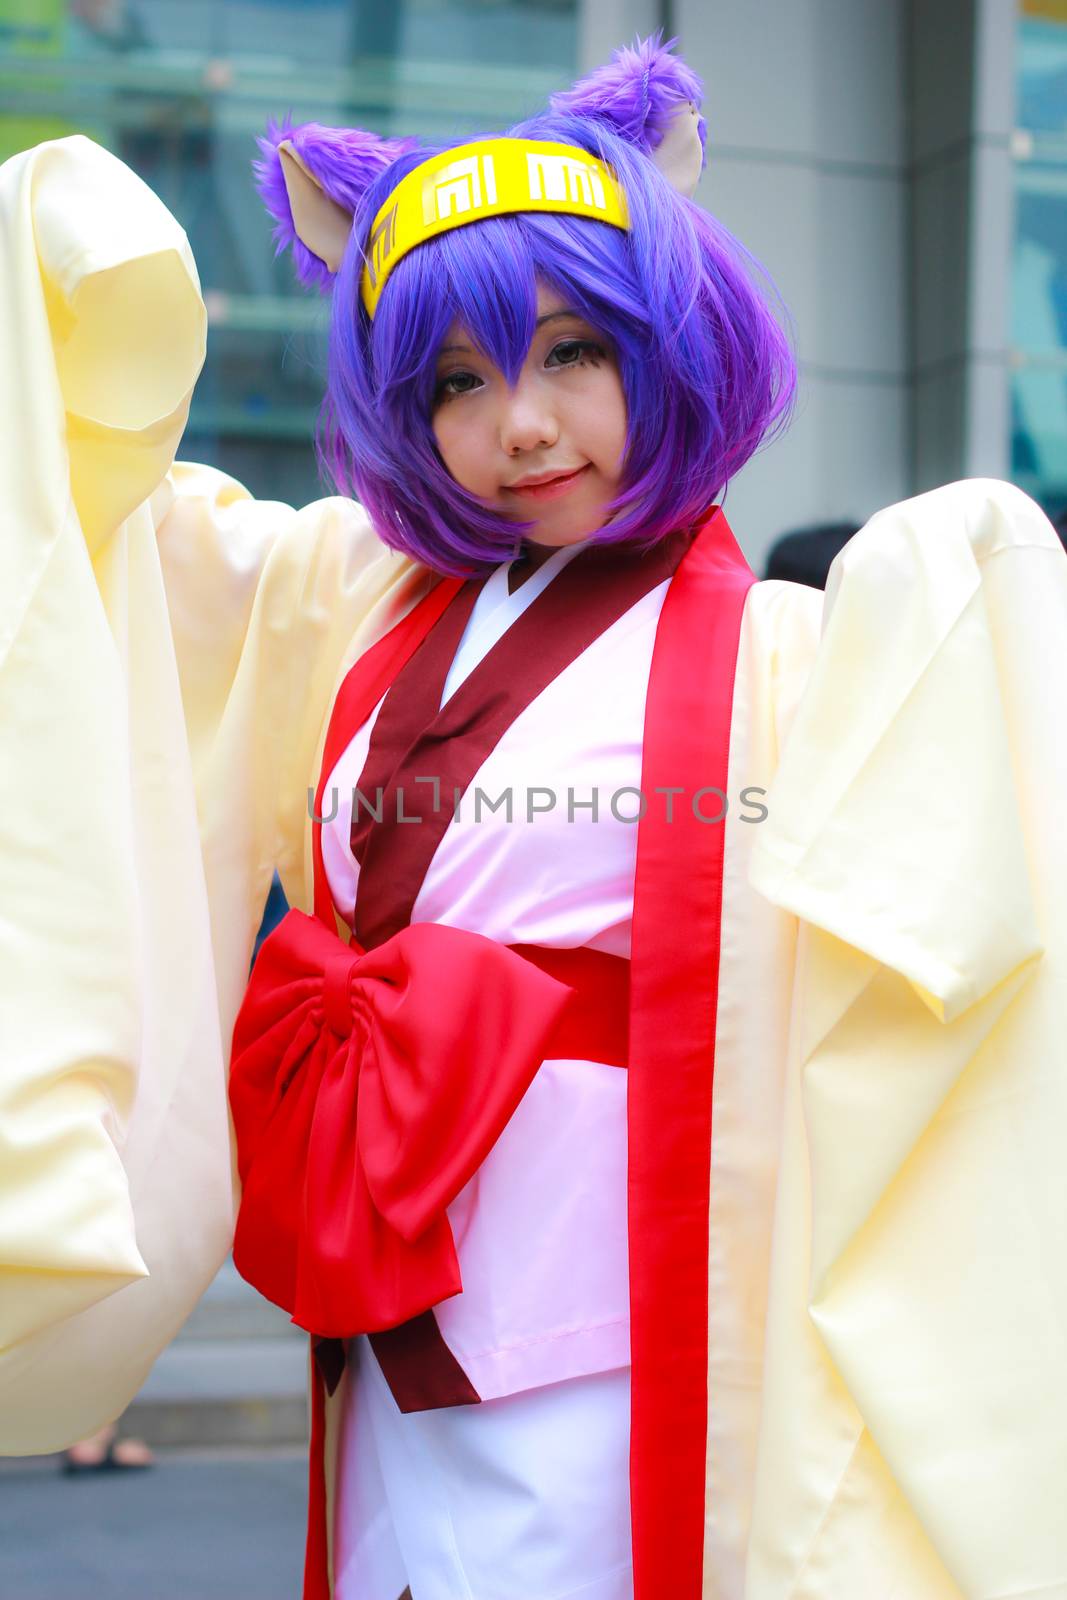 Bangkok - Aug 31: An unidentified Japanese anime cosplay hatsuse izuna pose  on August 31, 2014 at Central World, Bangkok, Thailand.